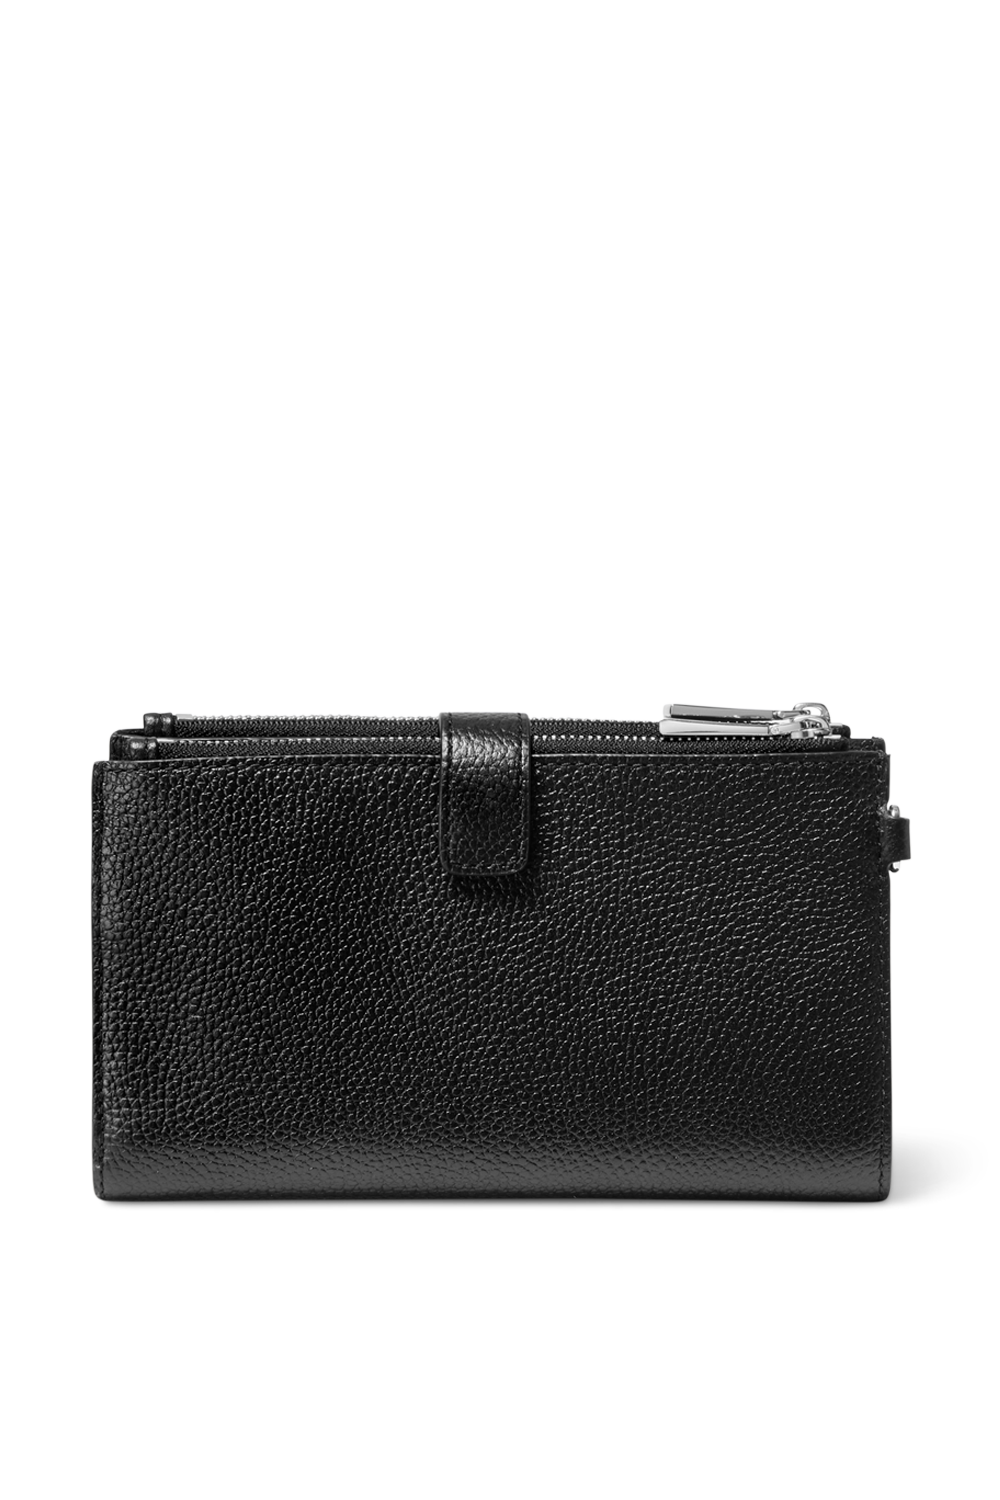 Adele Pebbled Leather Smartphone Wallet in Black MICHAEL KORS